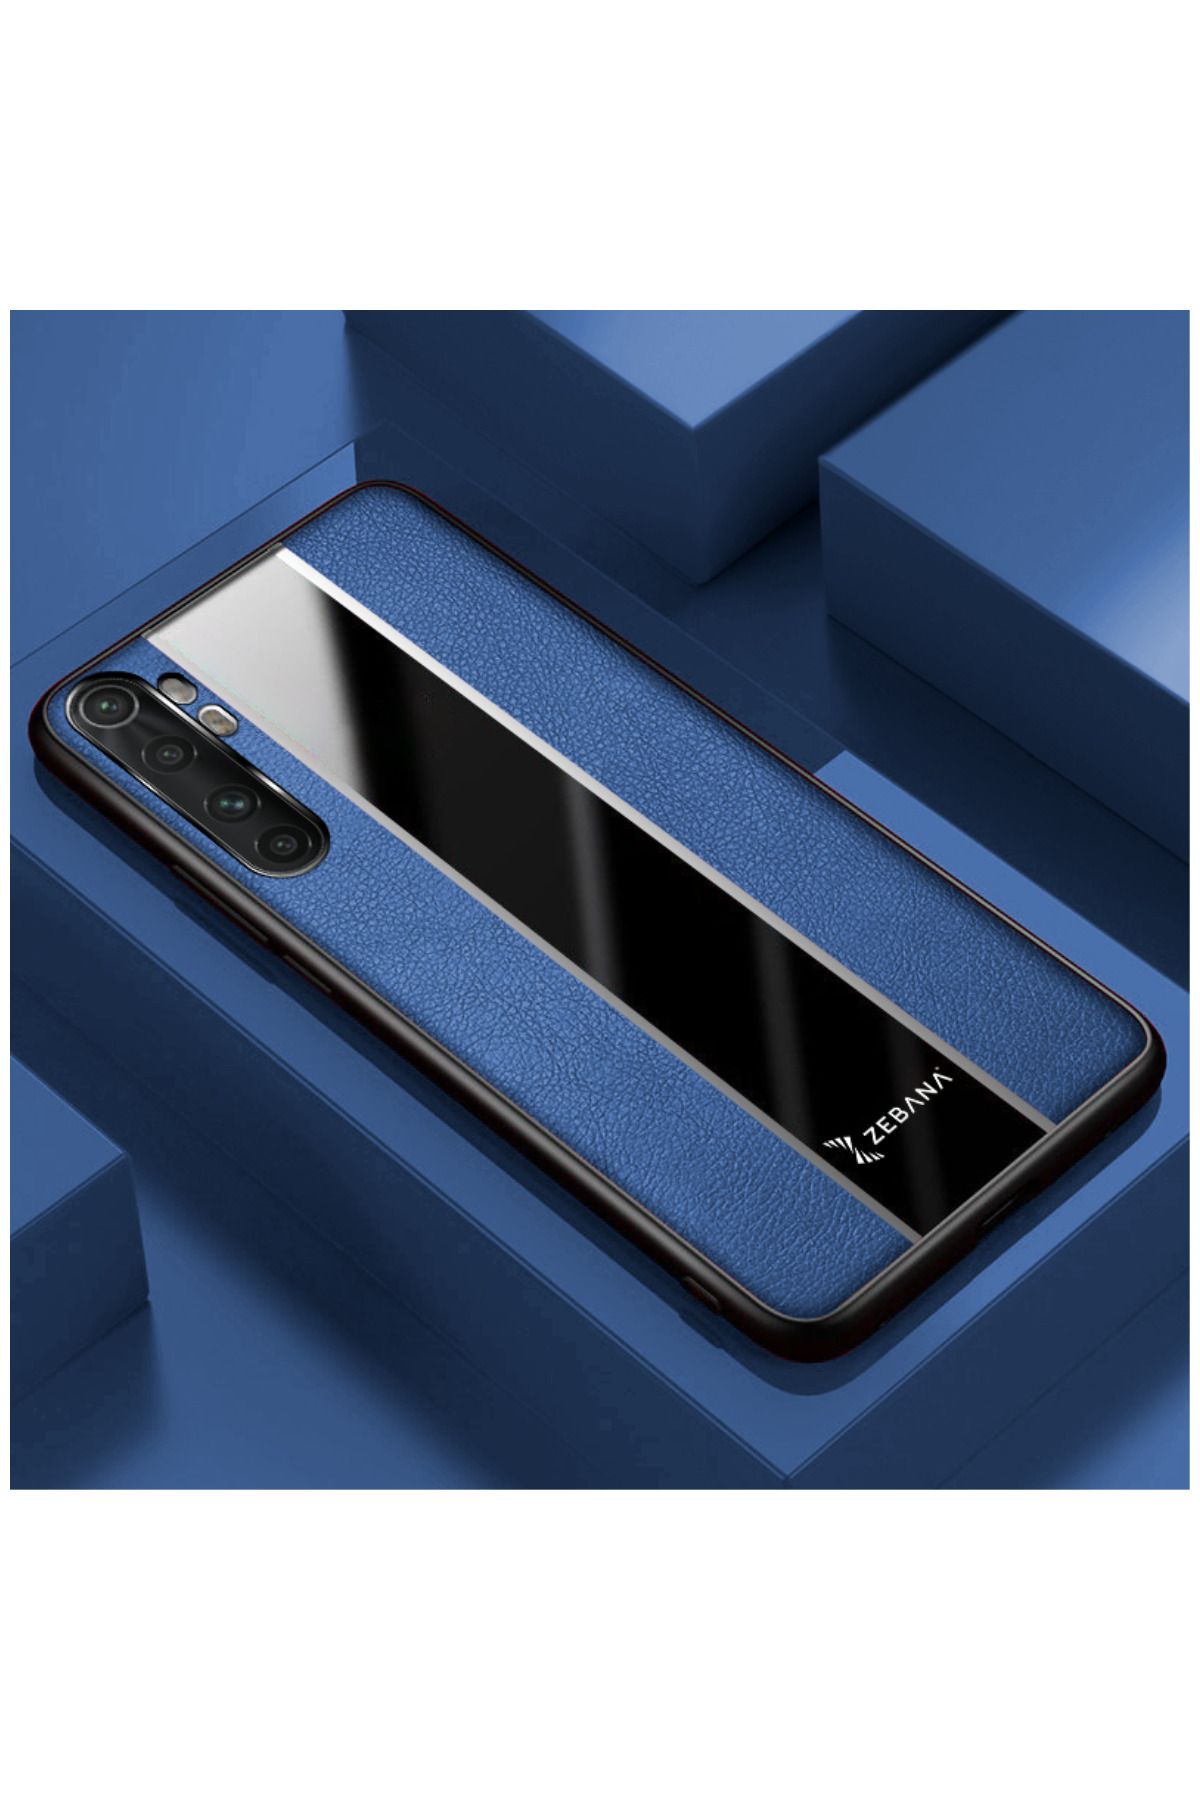 Dara Aksesuar Xiaomi Mi Note 10 Uyumlu Kılıf Zebana Premium Deri Kılıf Mavi